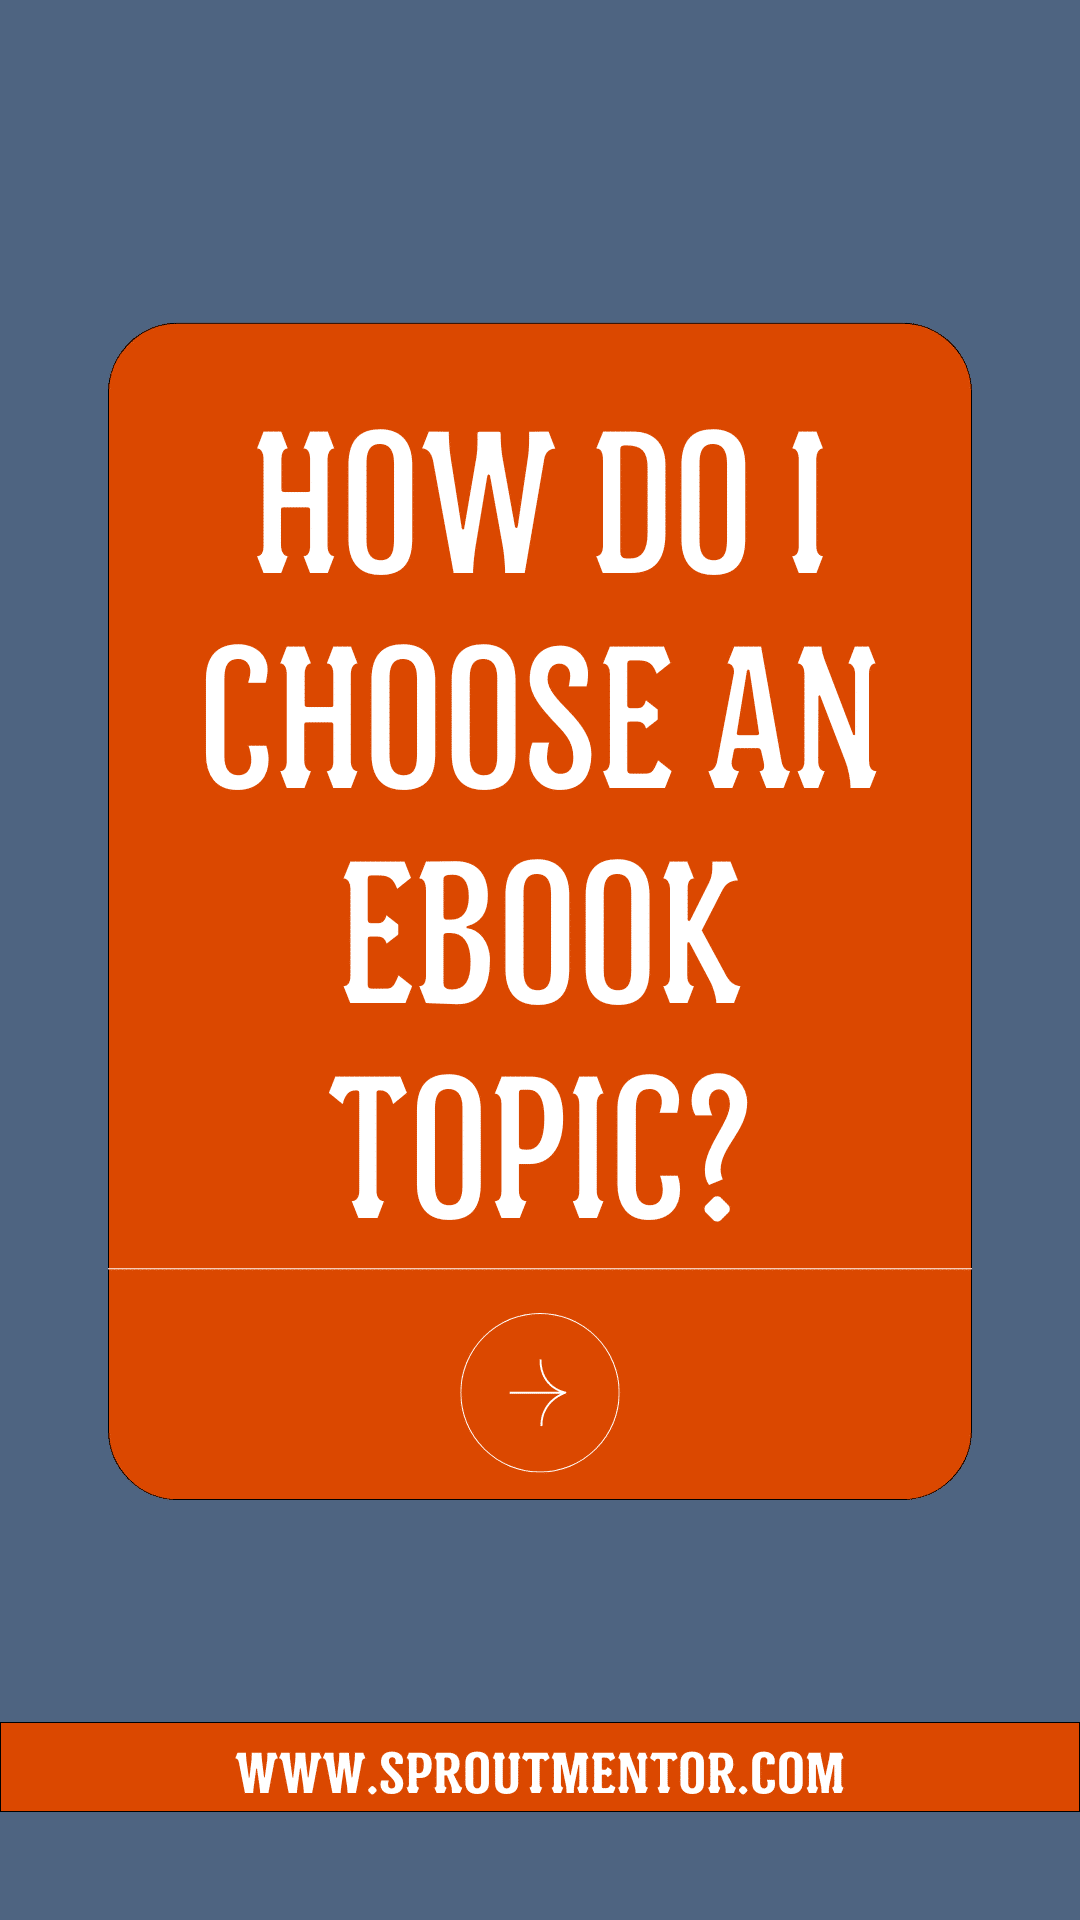 How-Do-I-Choose-an-eBook-Topic